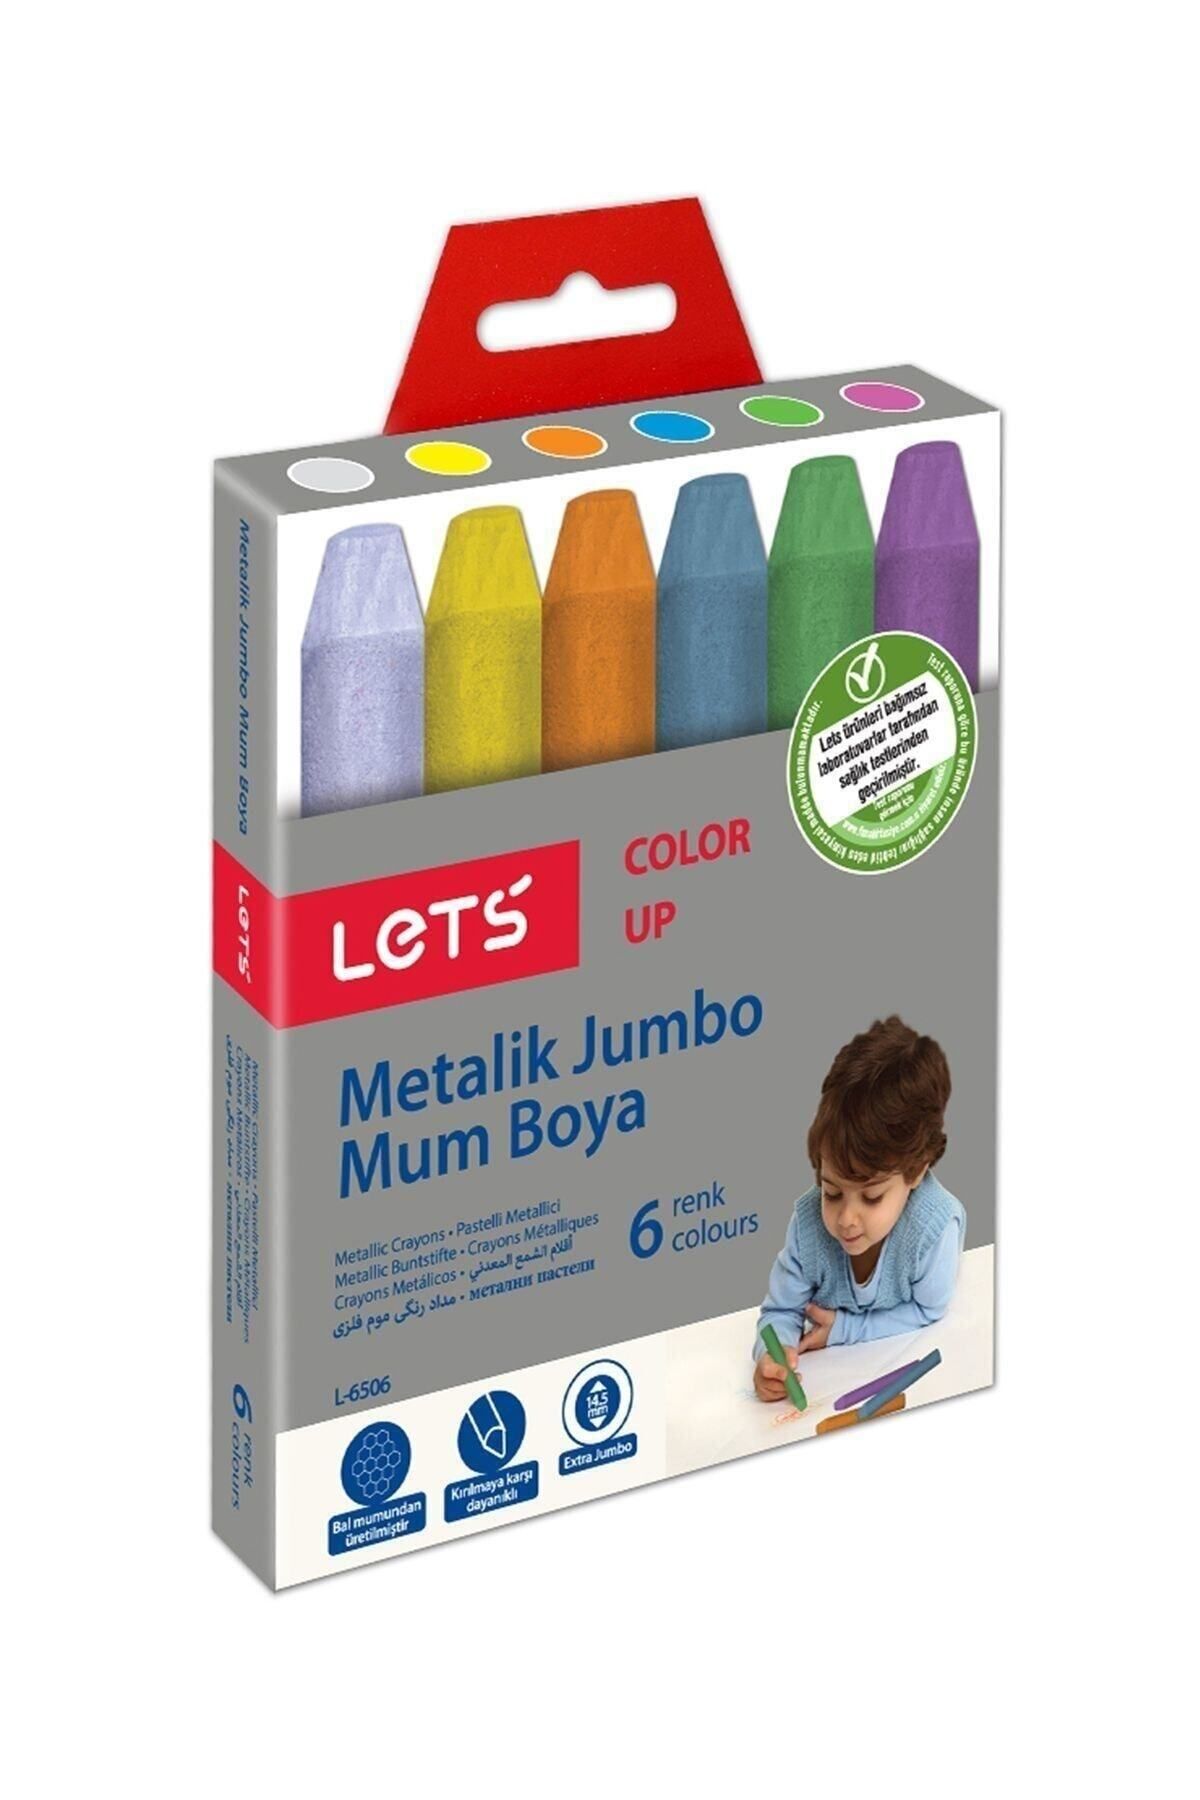 Lets 6 Renk Metalik Jumbo Mum Boya L-6506